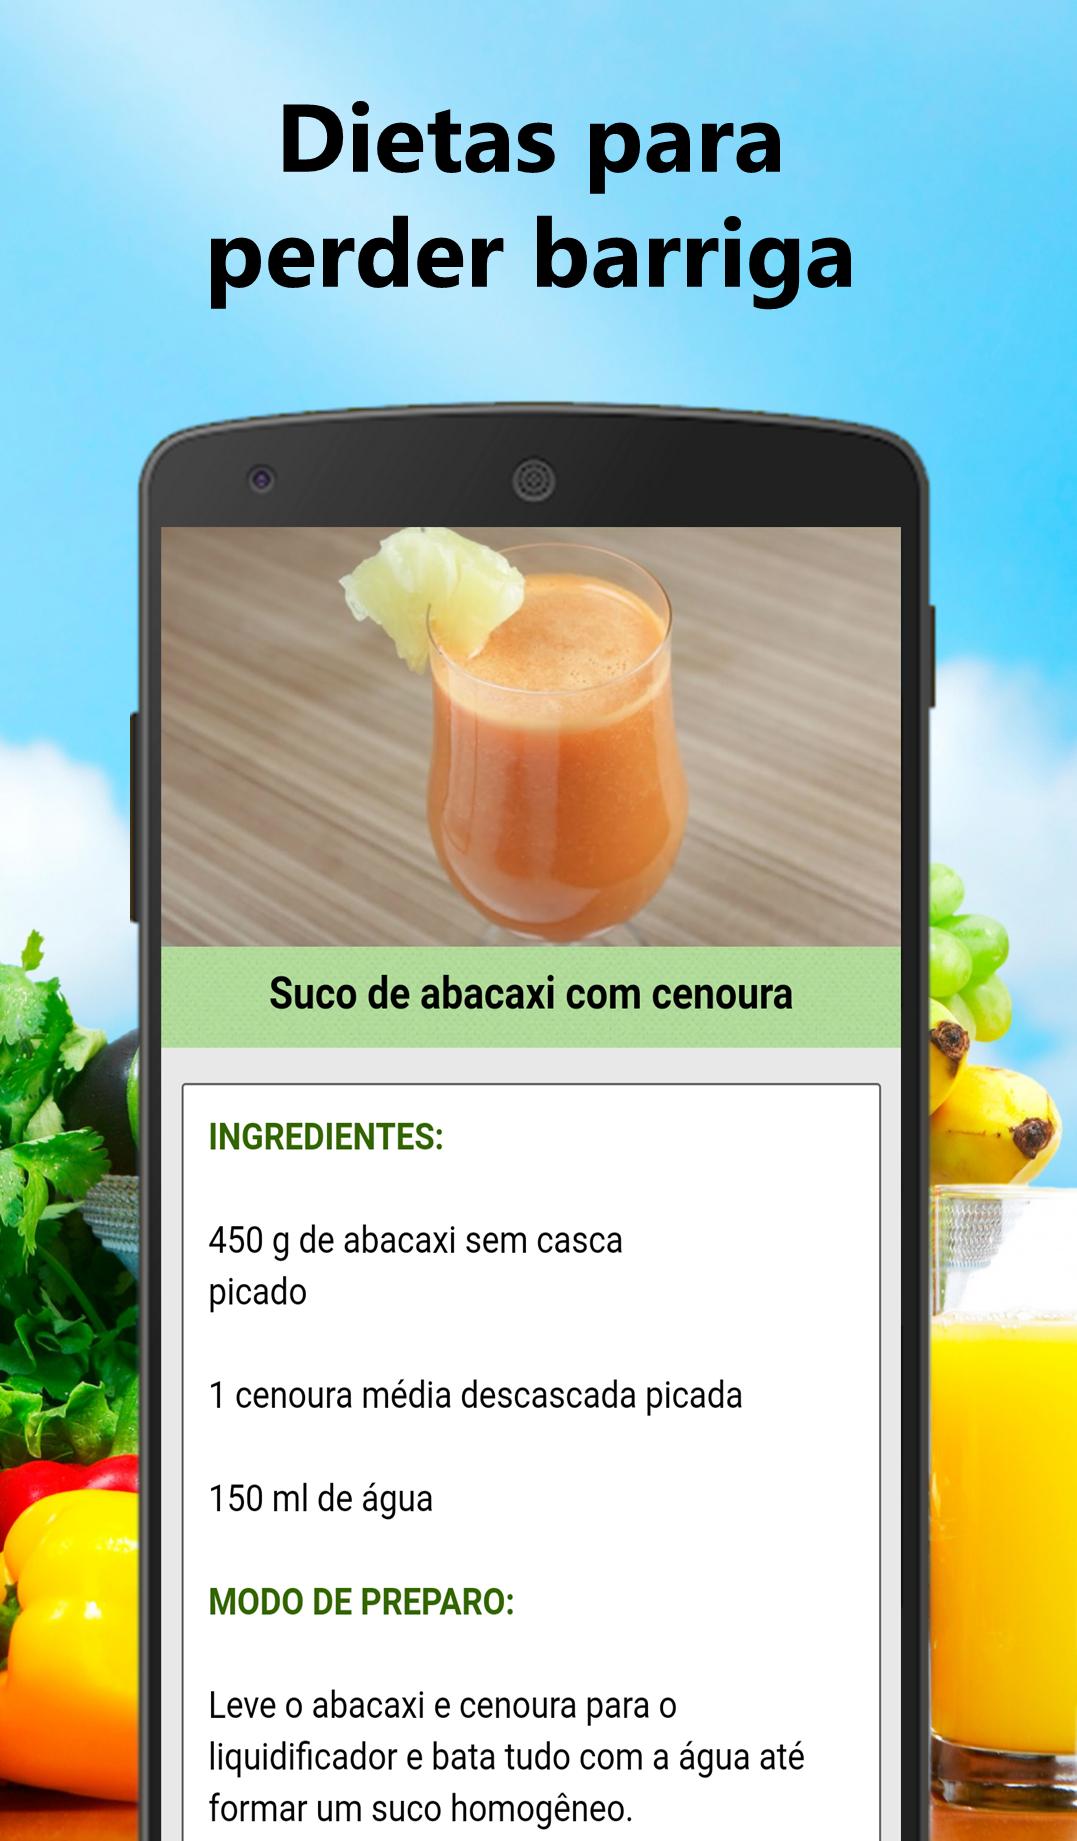 Dietas para Perder Barriga Emagrecer Rápido para Android - APK Baixar